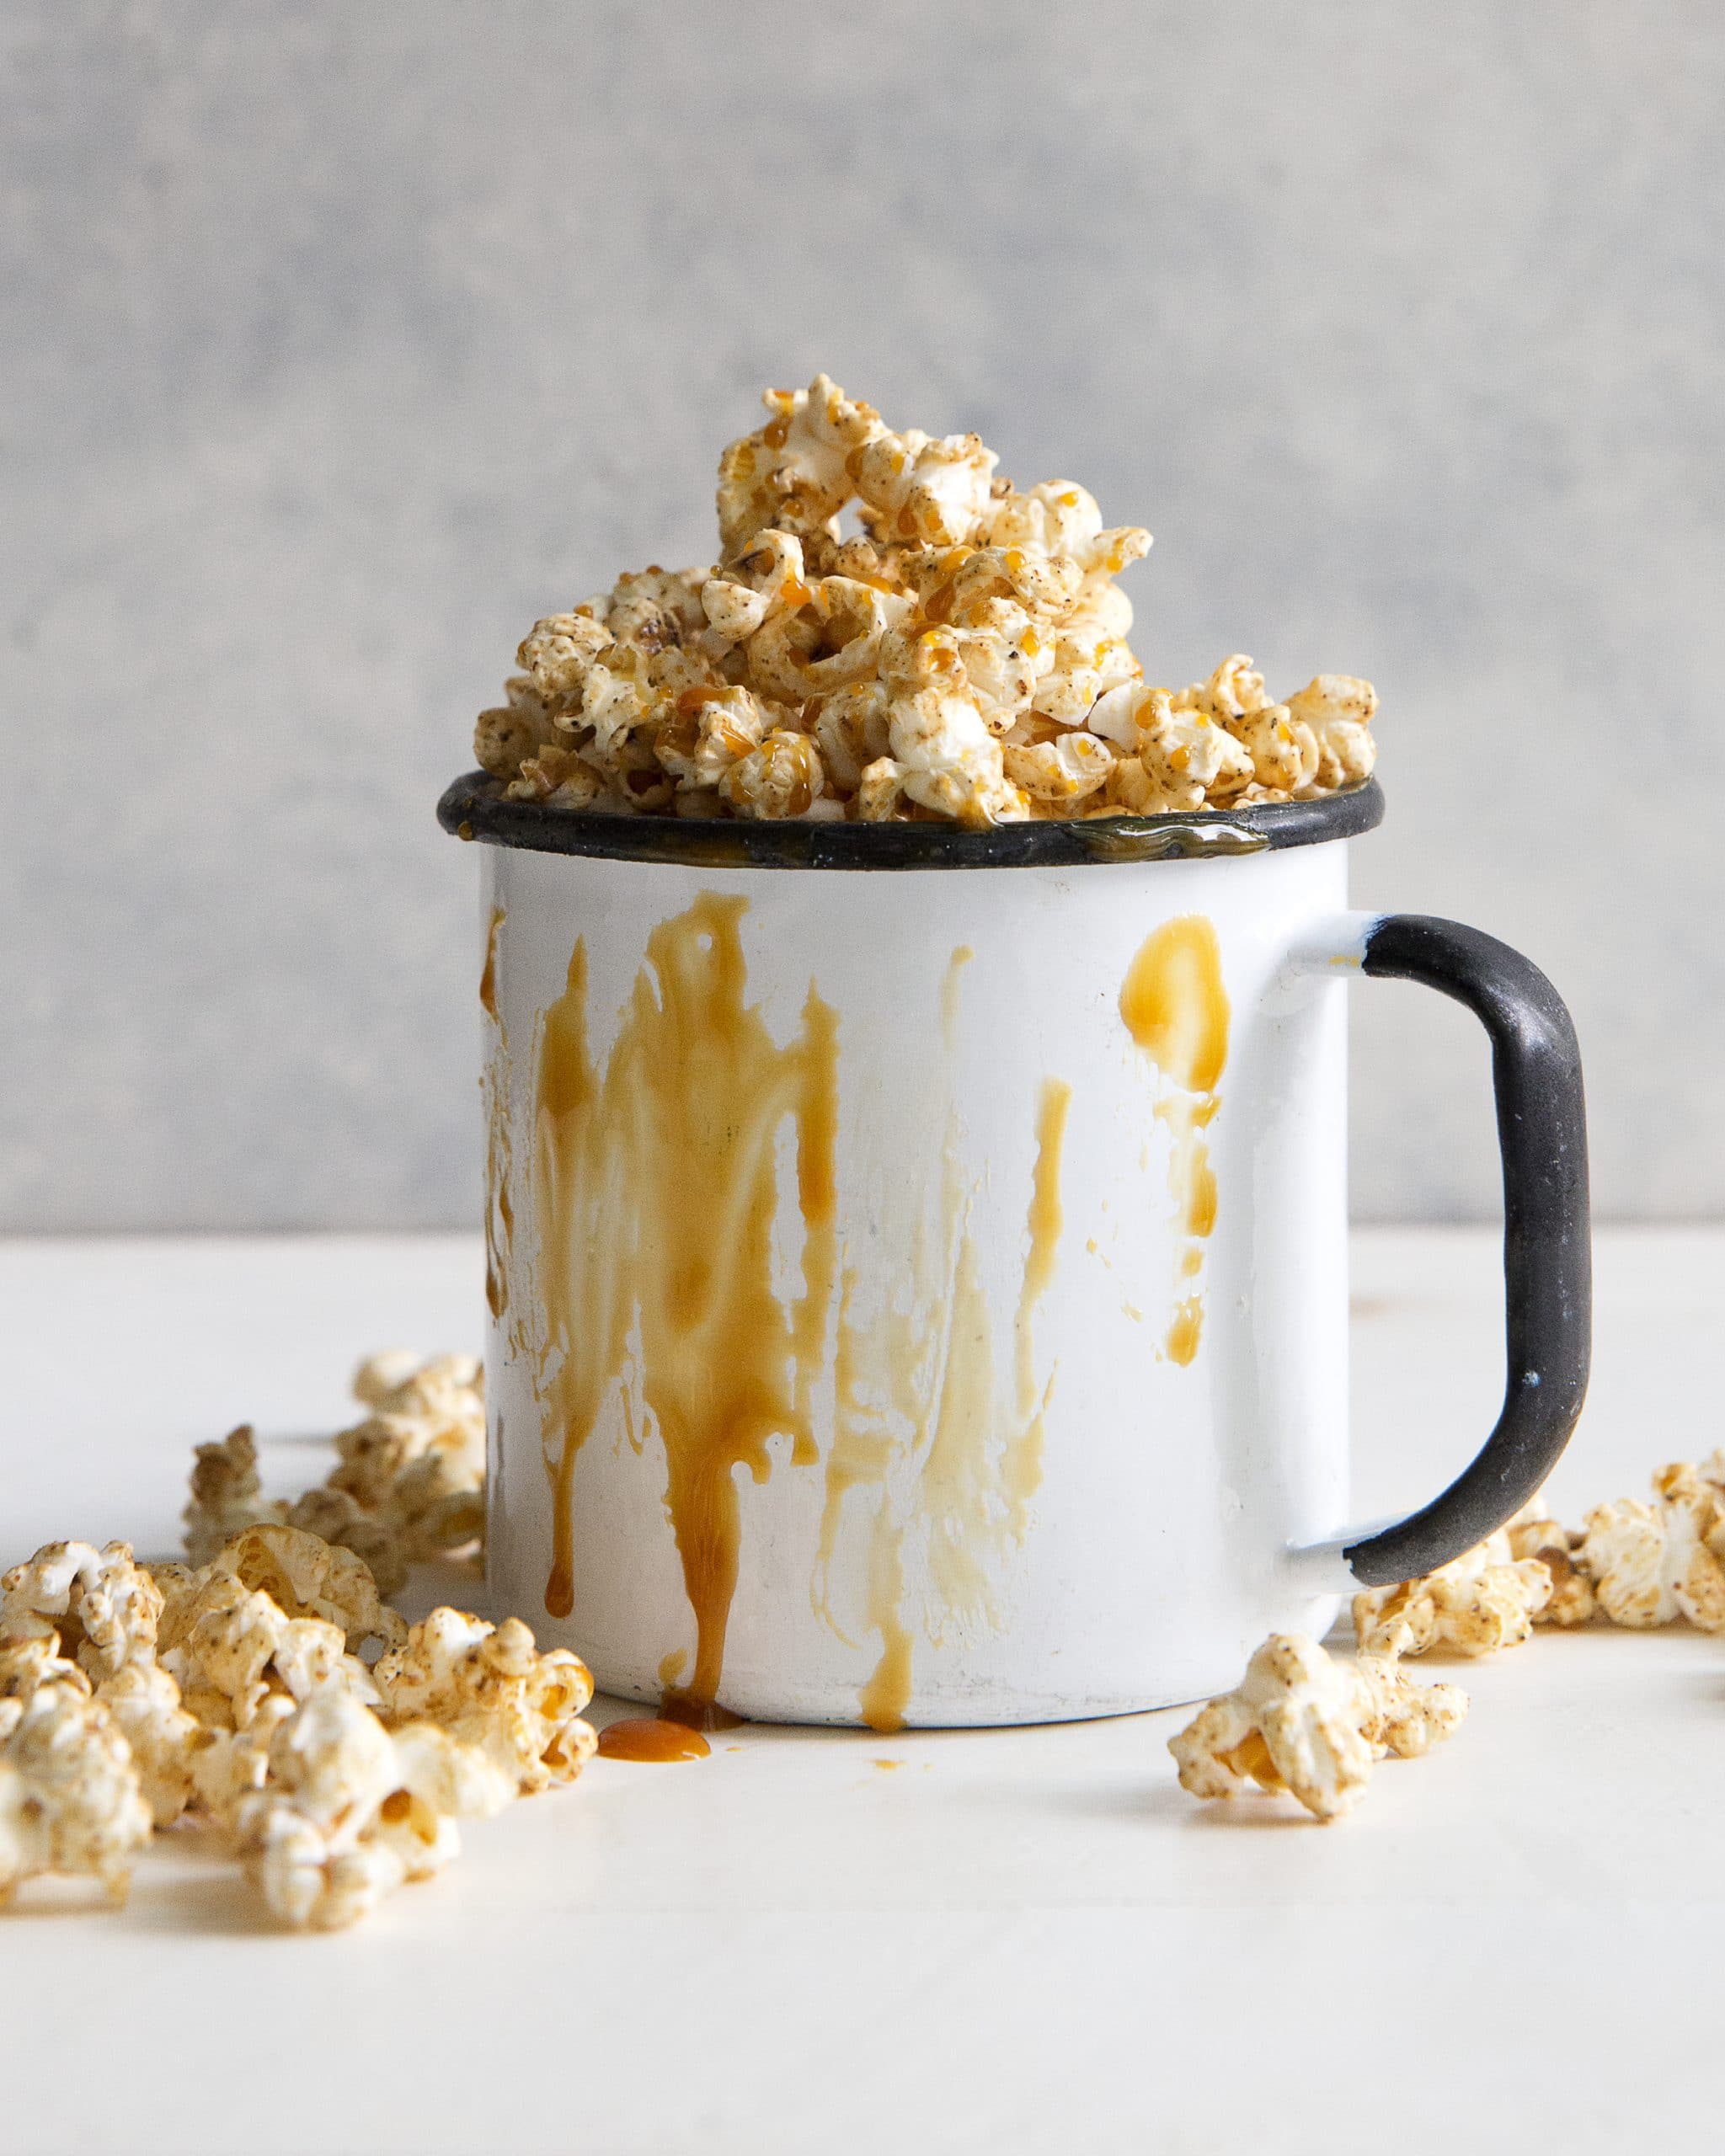 Caramel Popcorn in a large mug